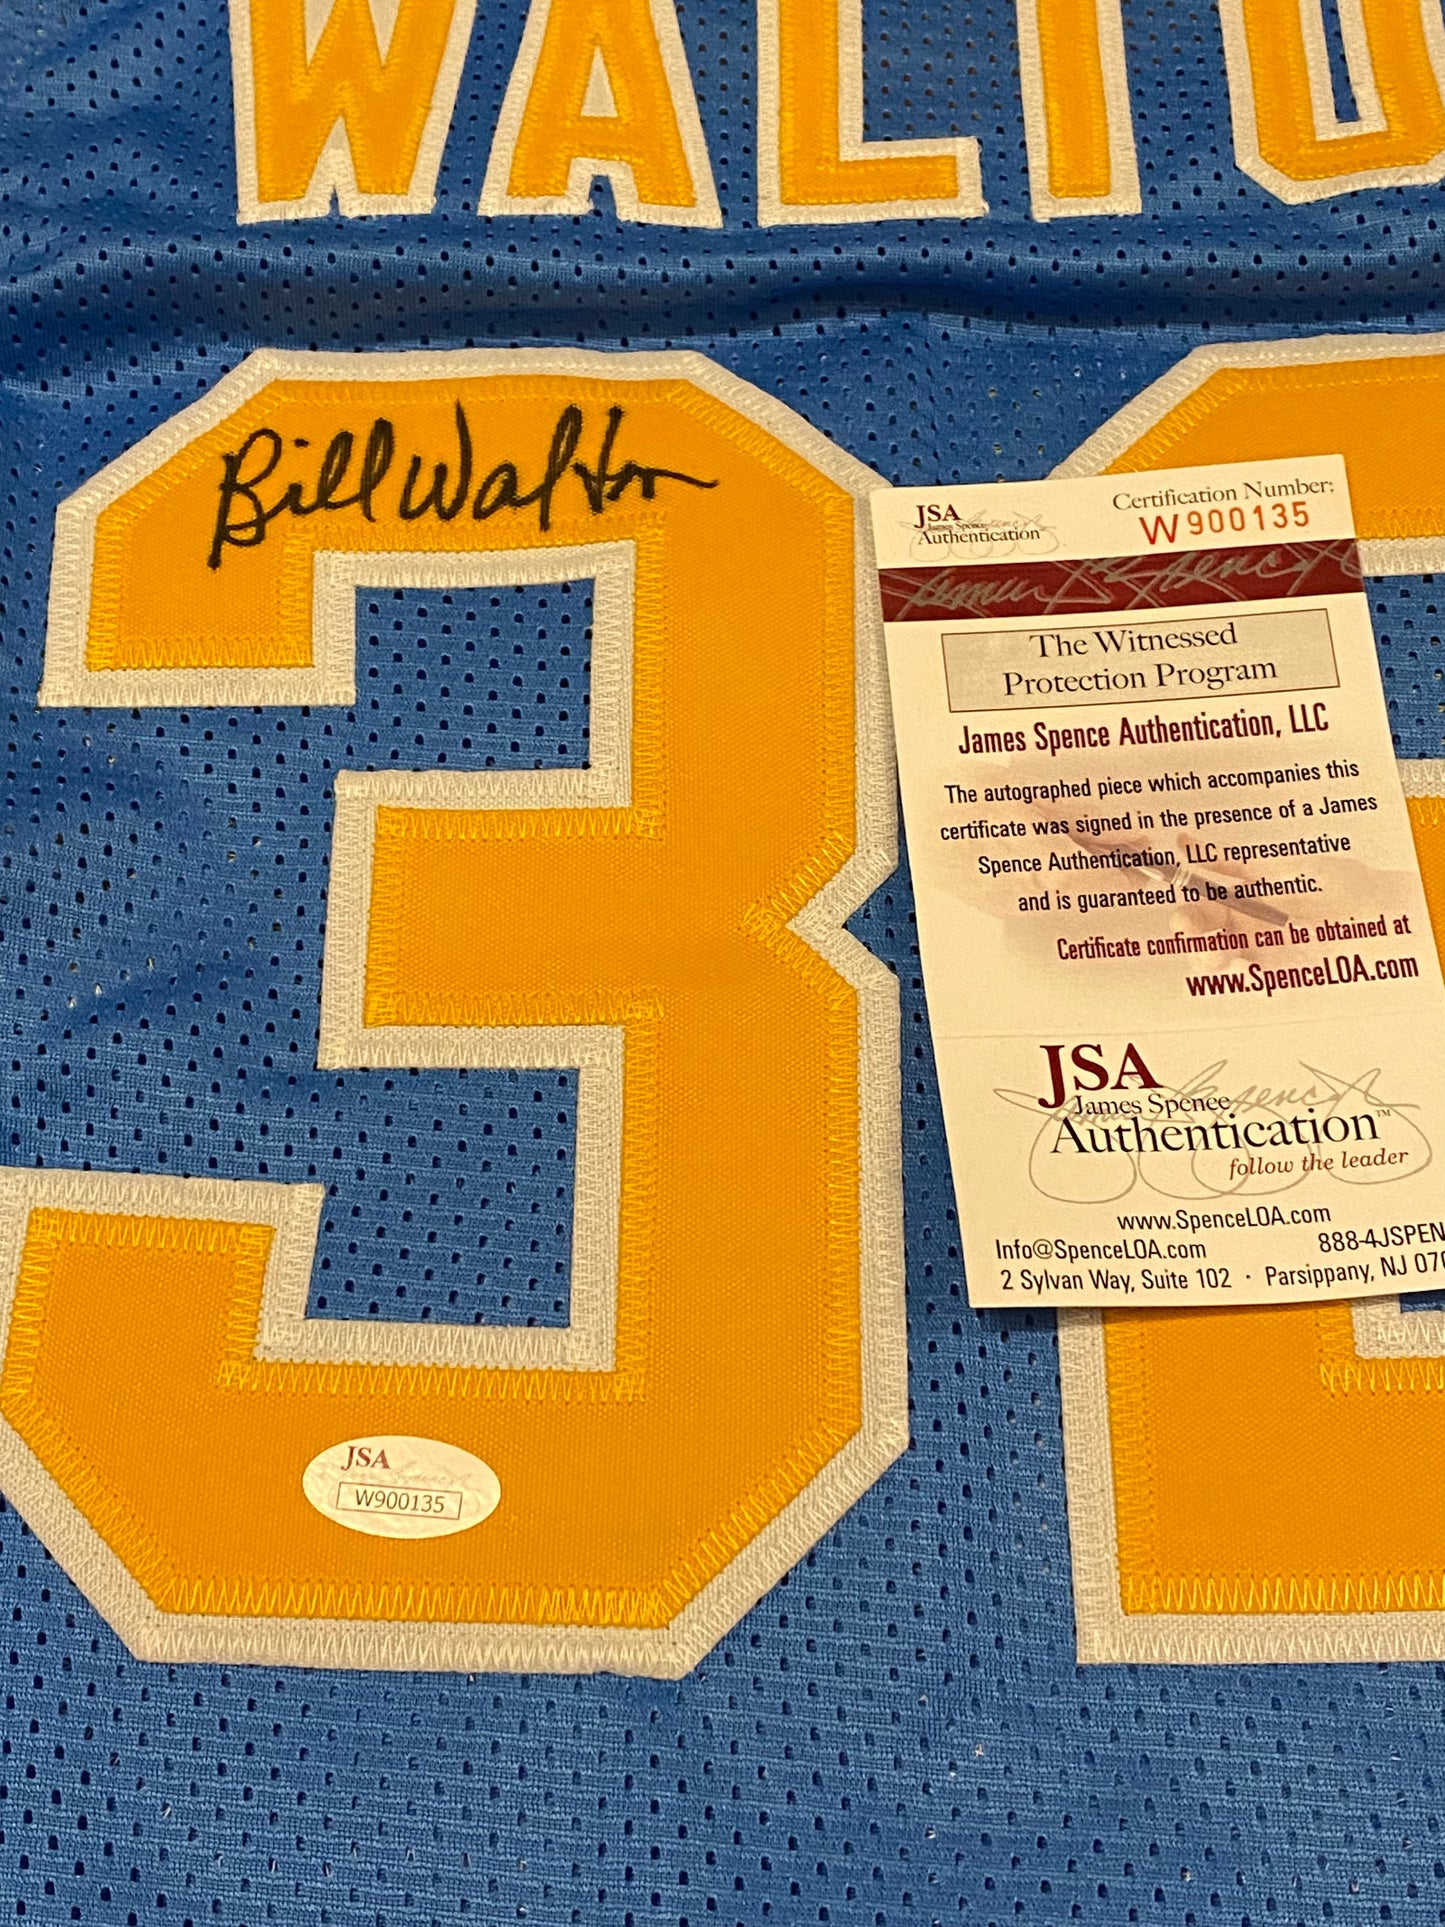 Bill Walton signed custom jersey UCLA (JSA COA)